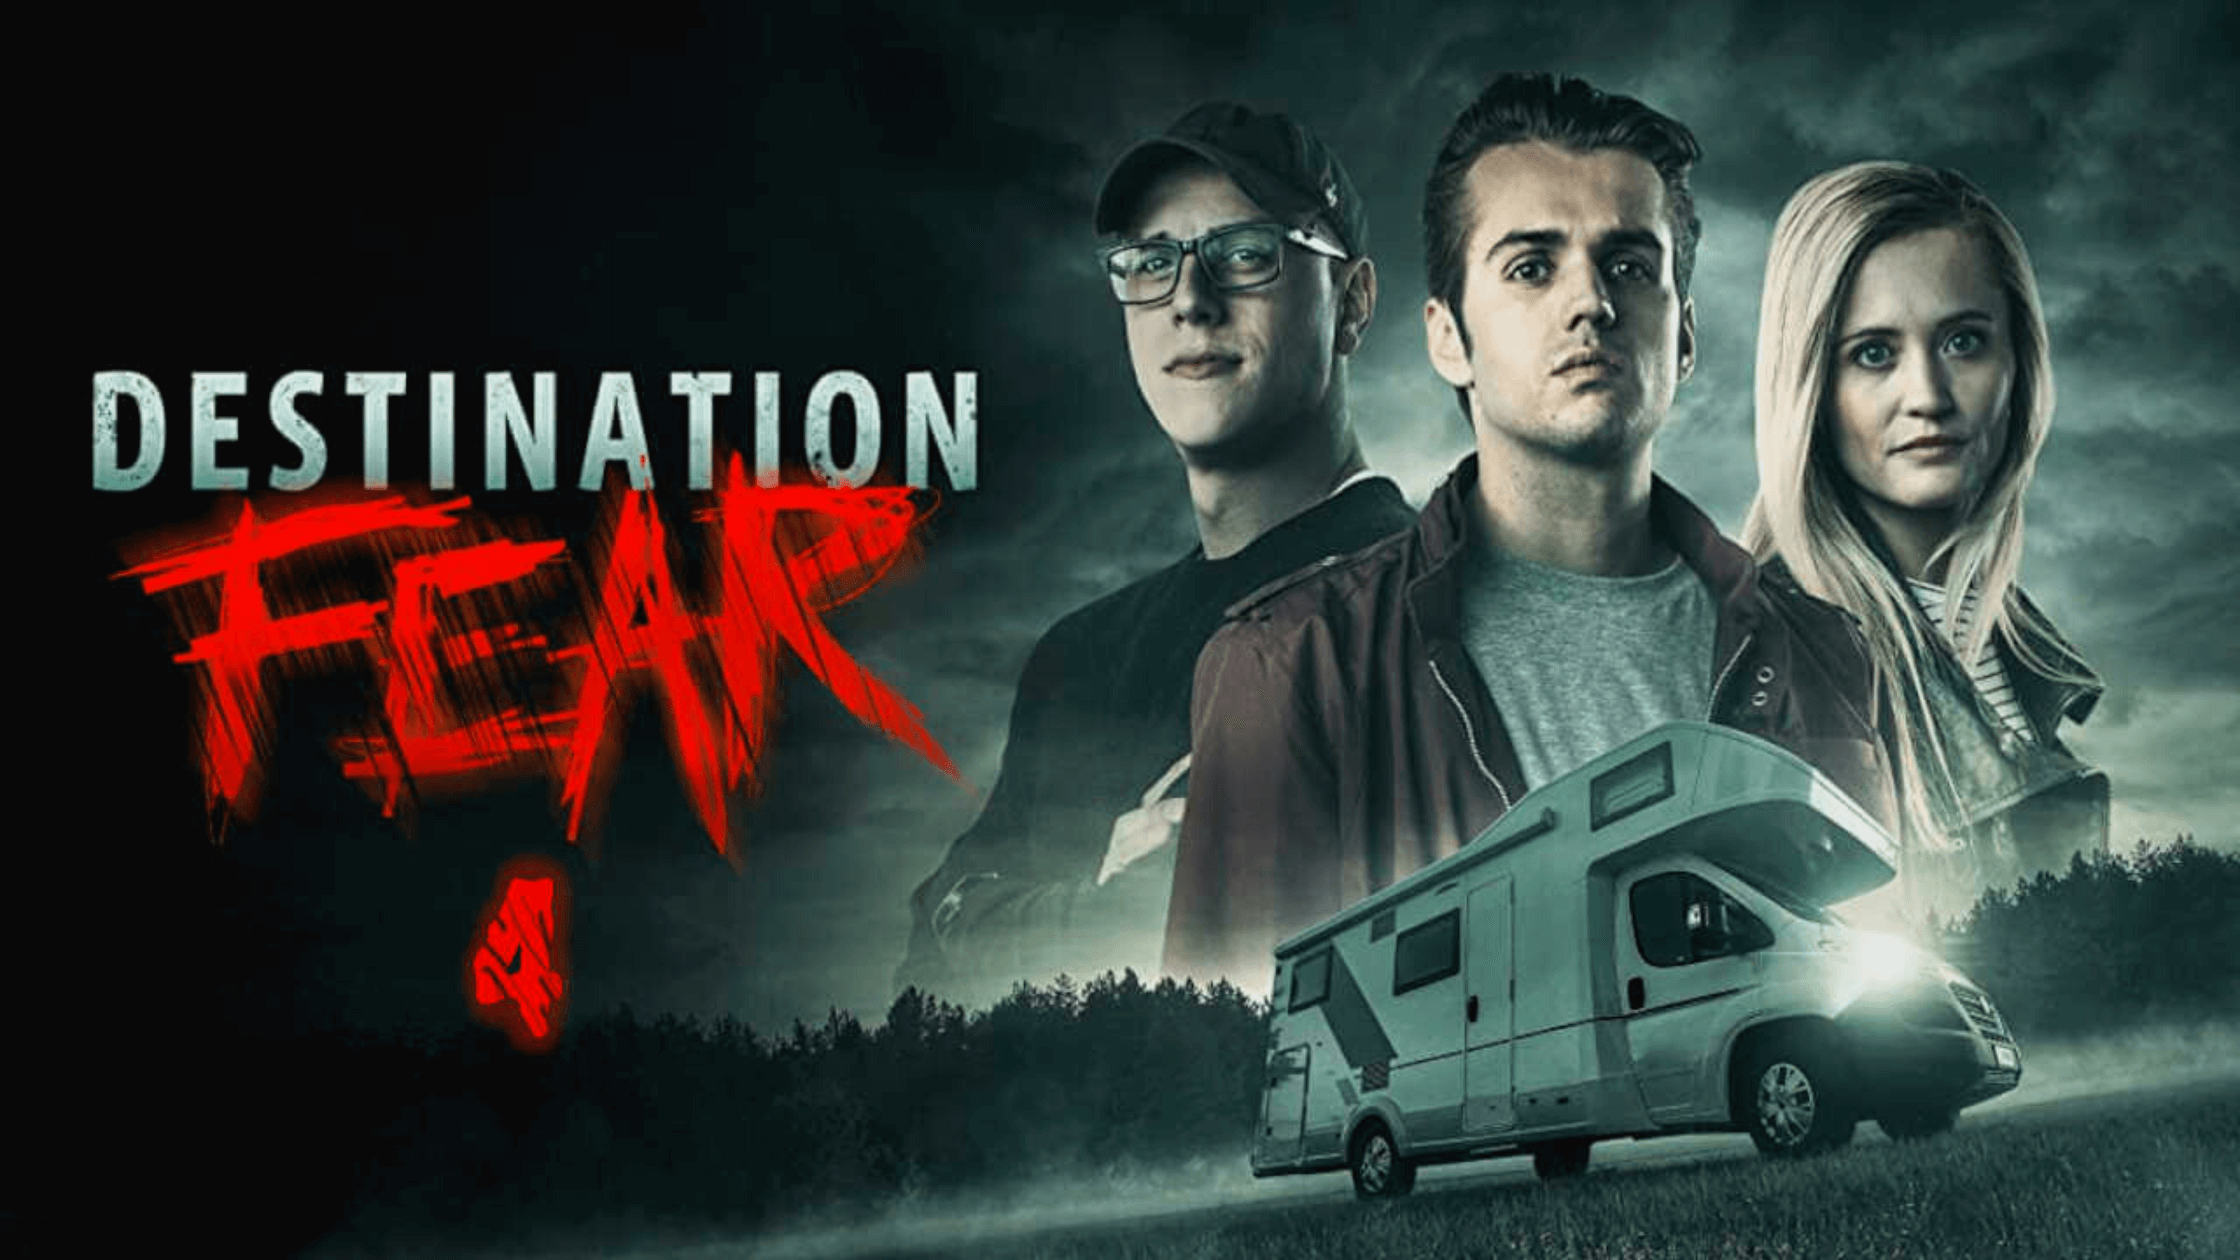 Destination Fear Season 4